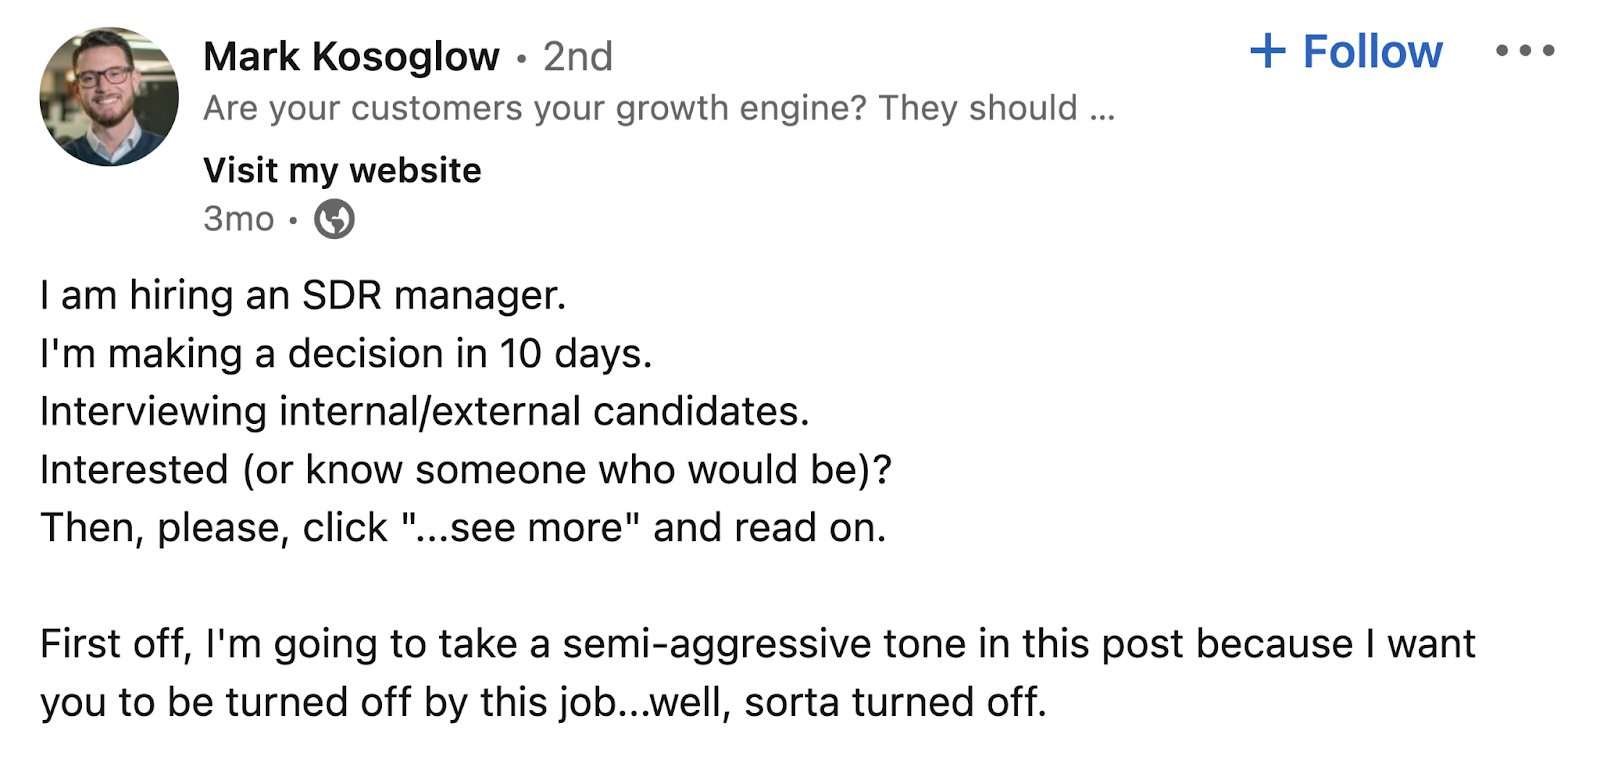 Mark Kosoglow's LinkedIn station  astir  hiring the caller   SDR manager